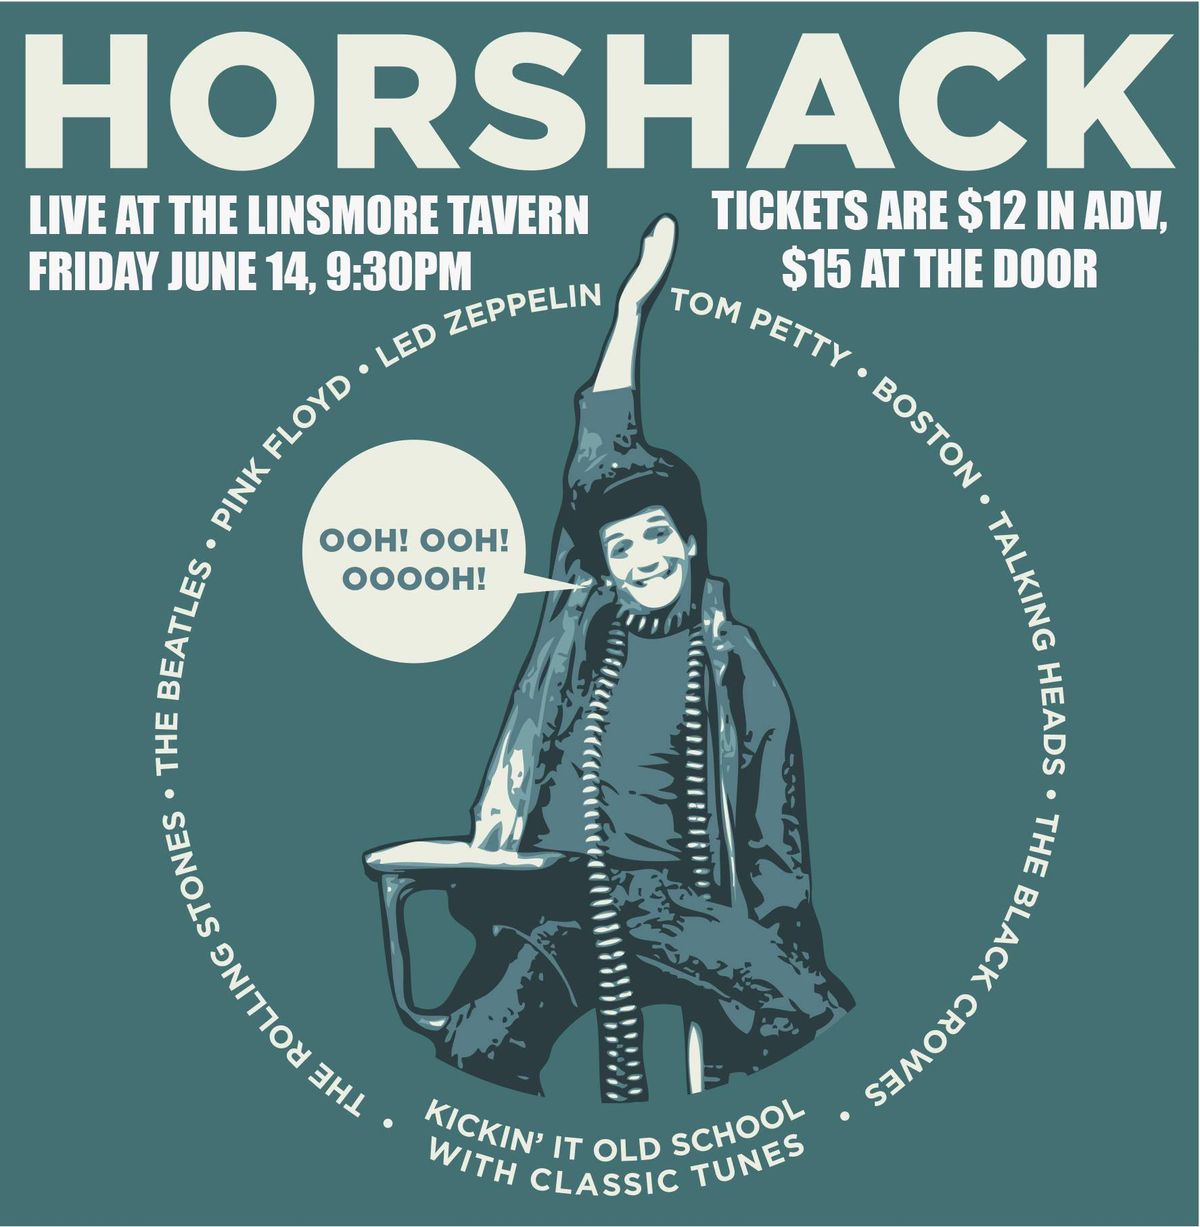 Horshack \u2013 The Ultimate Cover Band Rocks the Linsmore Tavern!